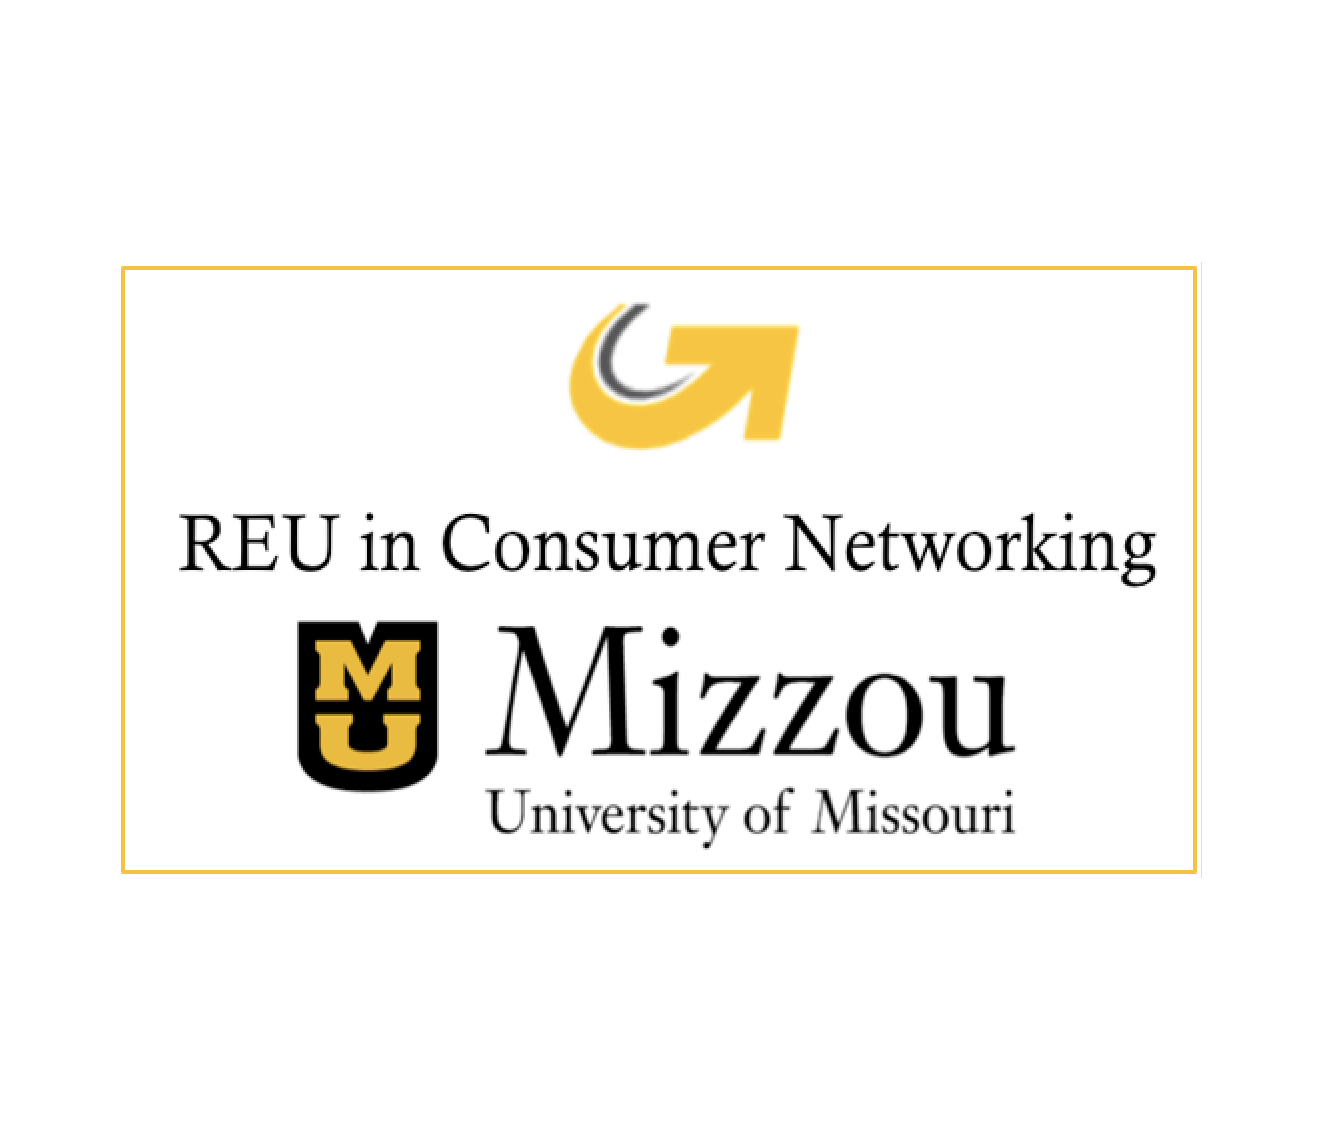 REU in Consumer Networking at Mizzou